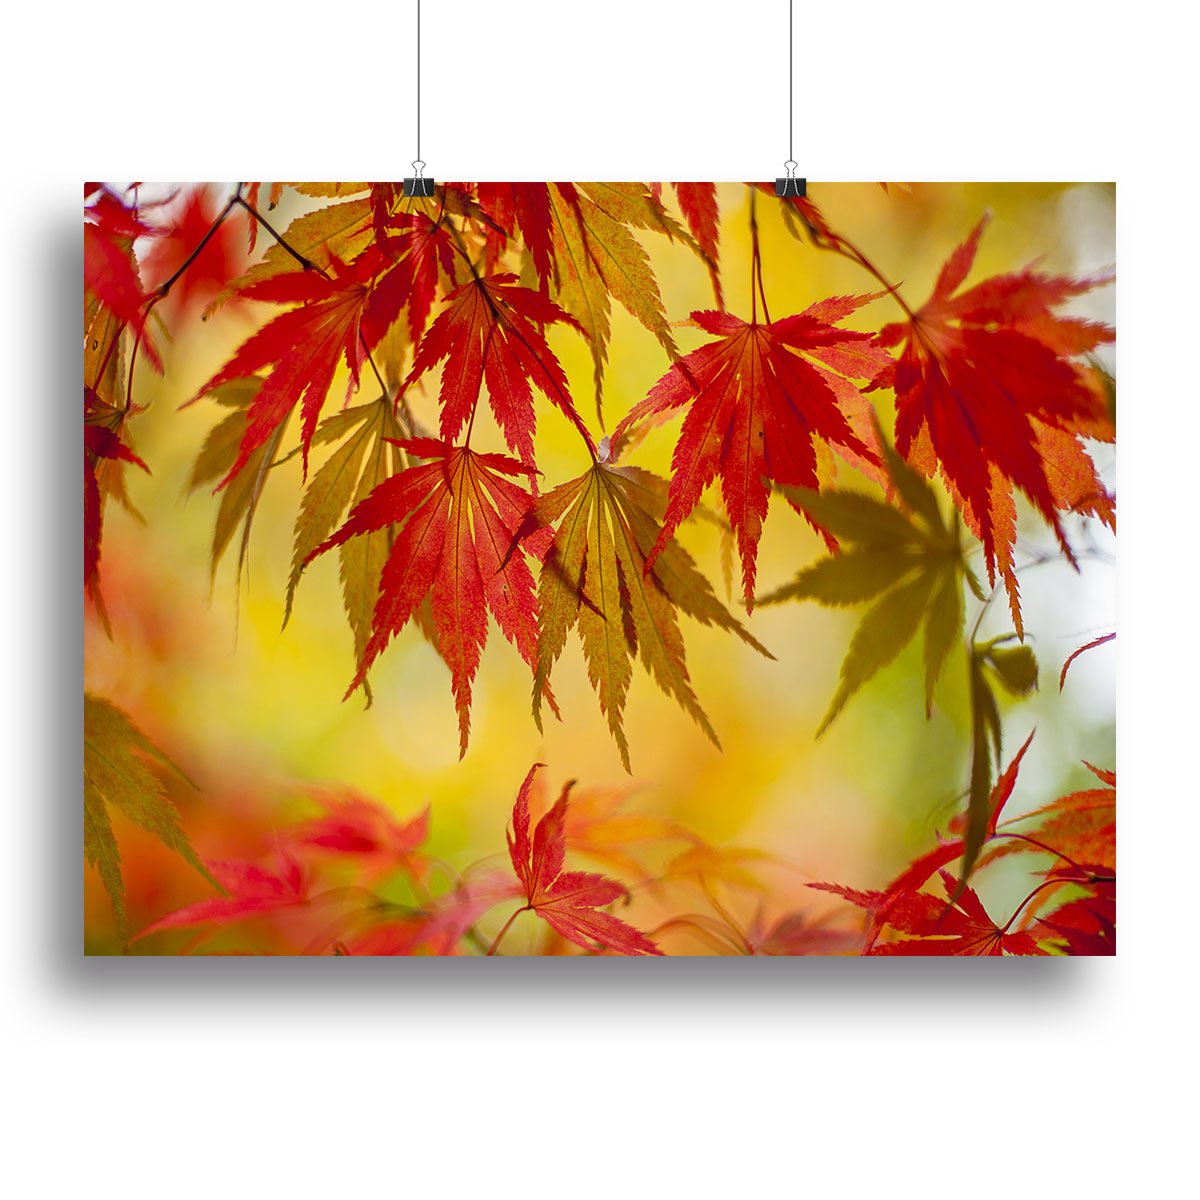 Leaf Patterns Canvas Print or Poster